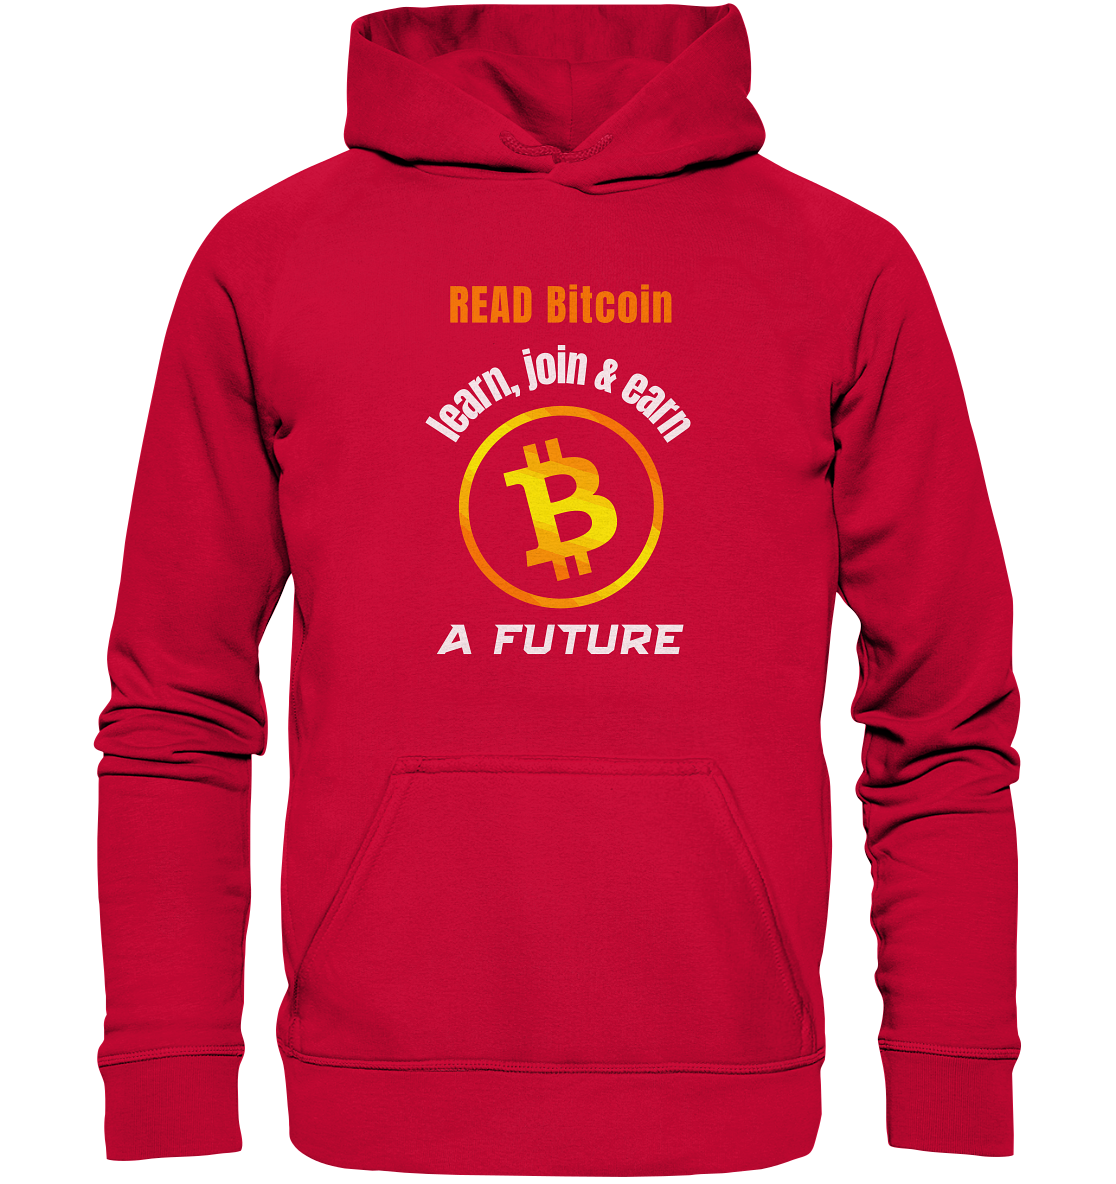 READ BITCOIN, learn & earn A FUTURE - Basic Unisex Hoodie